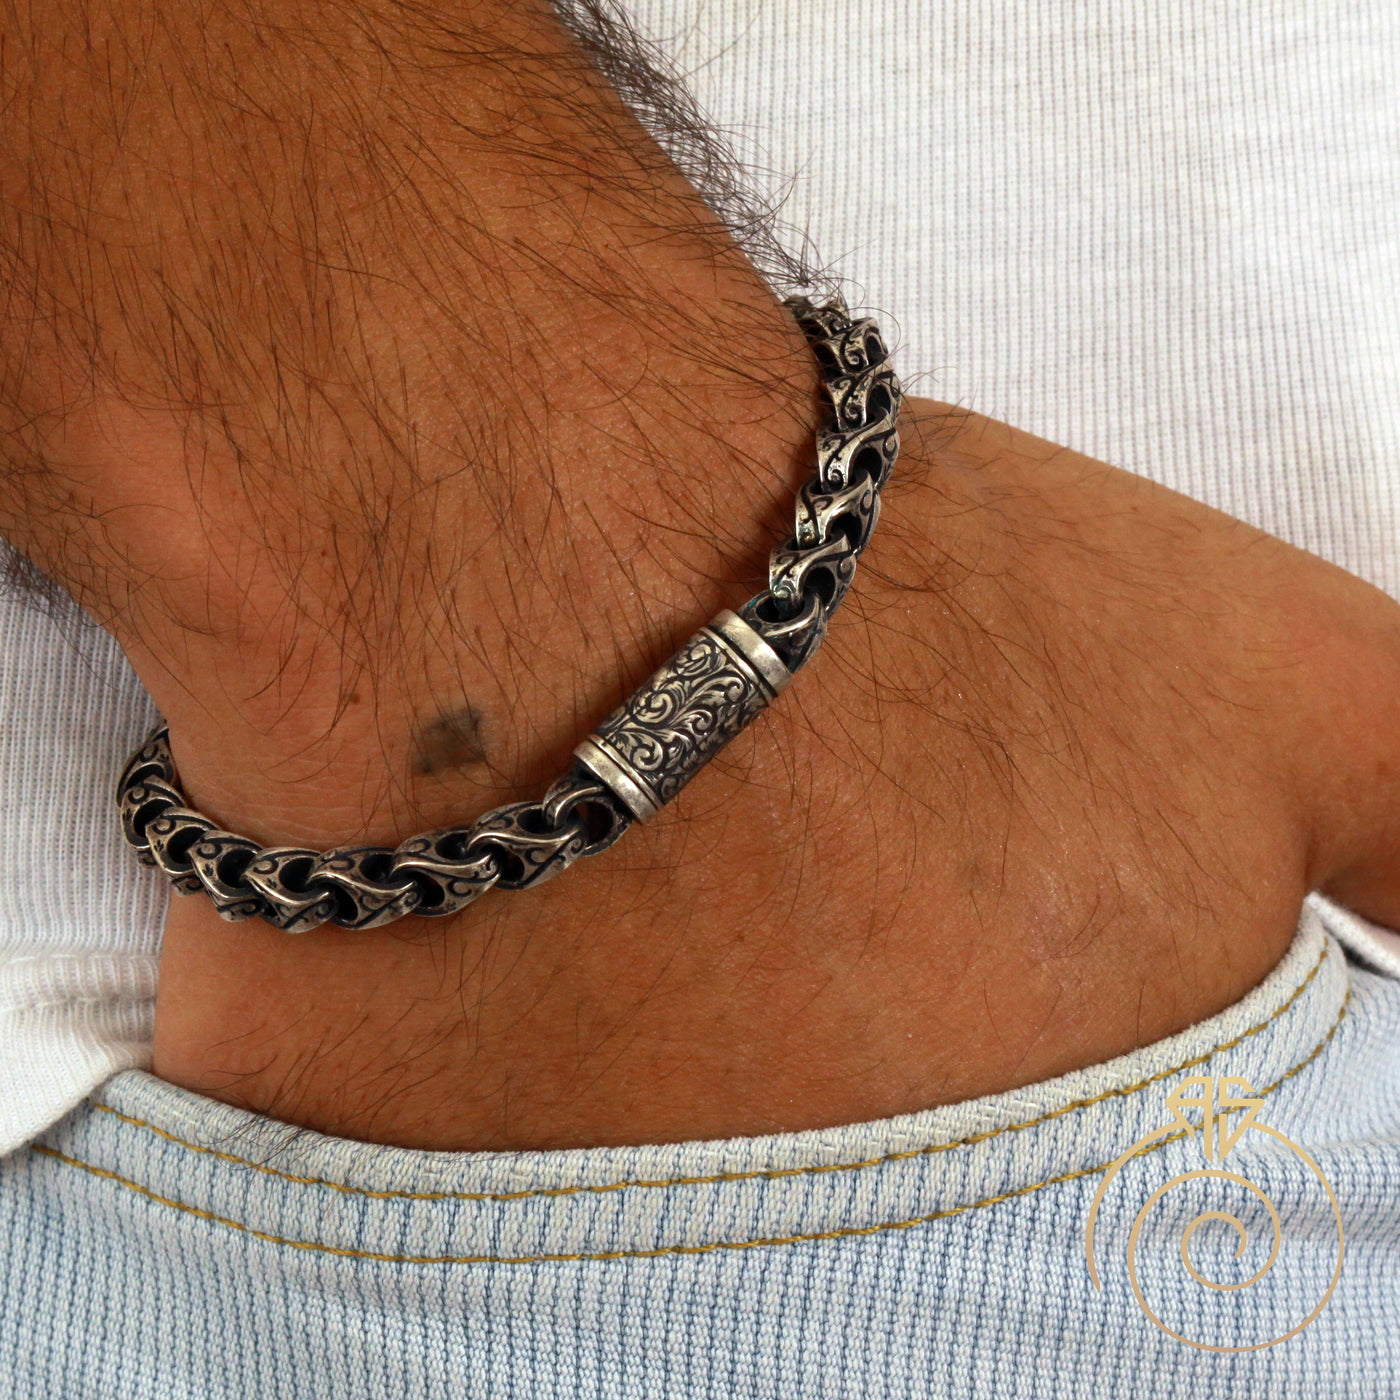 Unusual Silver Chain Bracelet For Men | LOVE2HAVE in the UK!